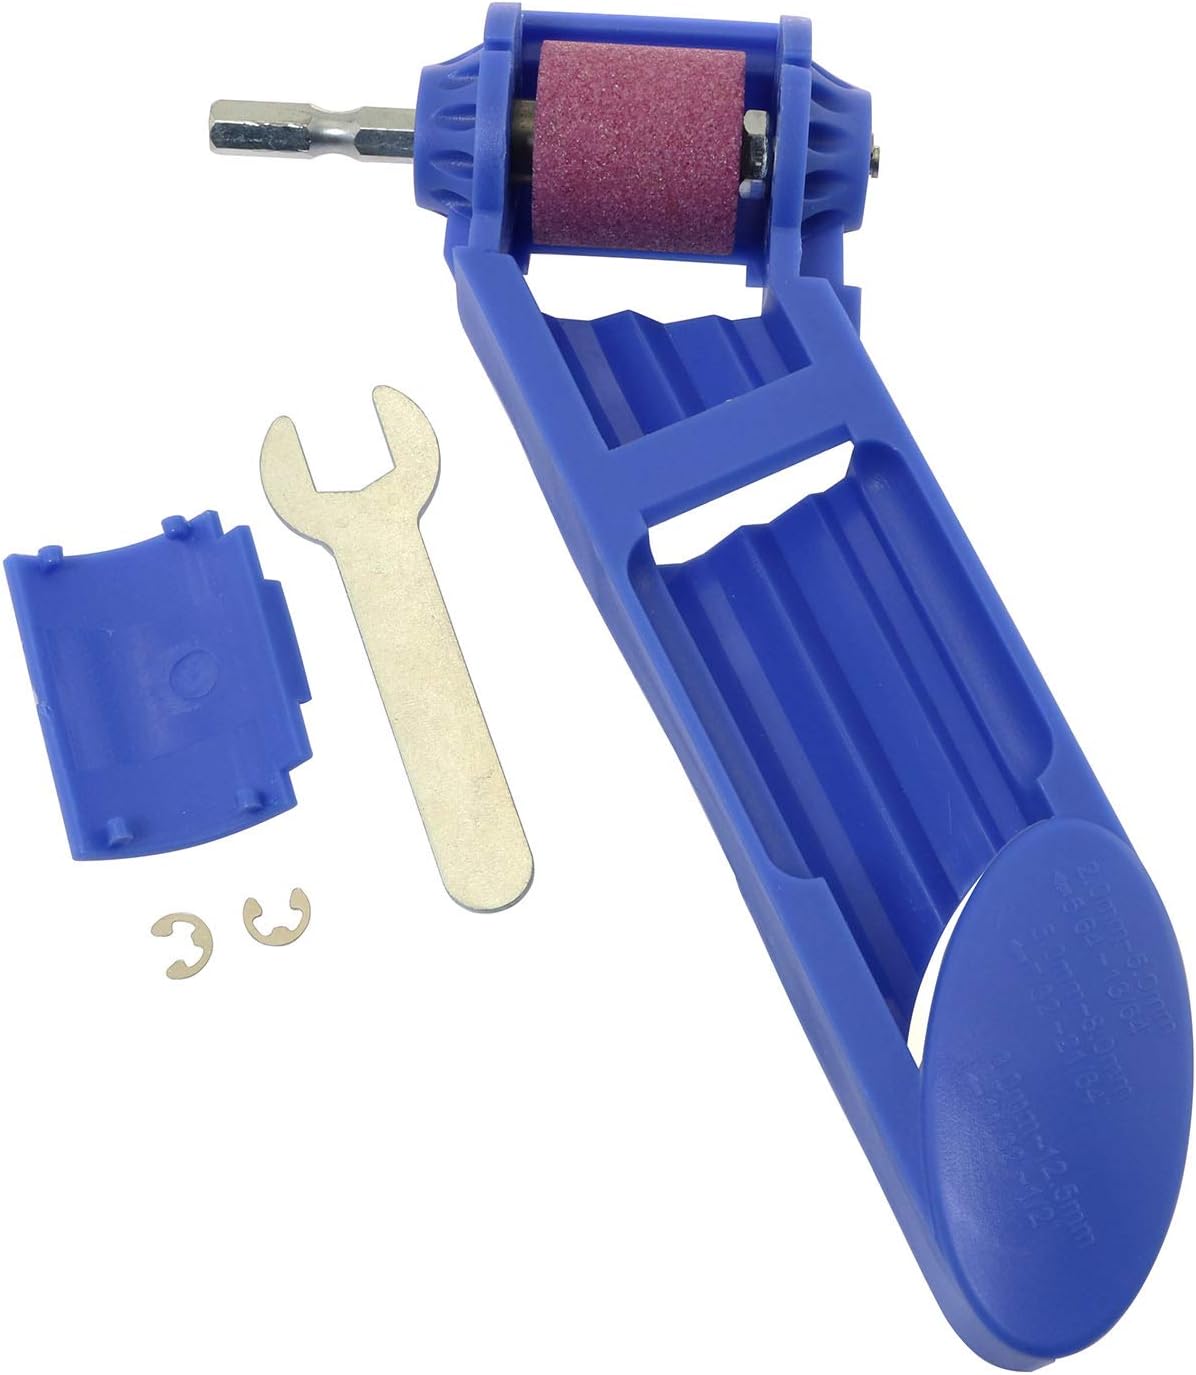 Magic&shell Diamond Drill Bit Sharpening Tool Corundum Grinding Wheel with Spanner Wrench for Grinder Polishing Blue